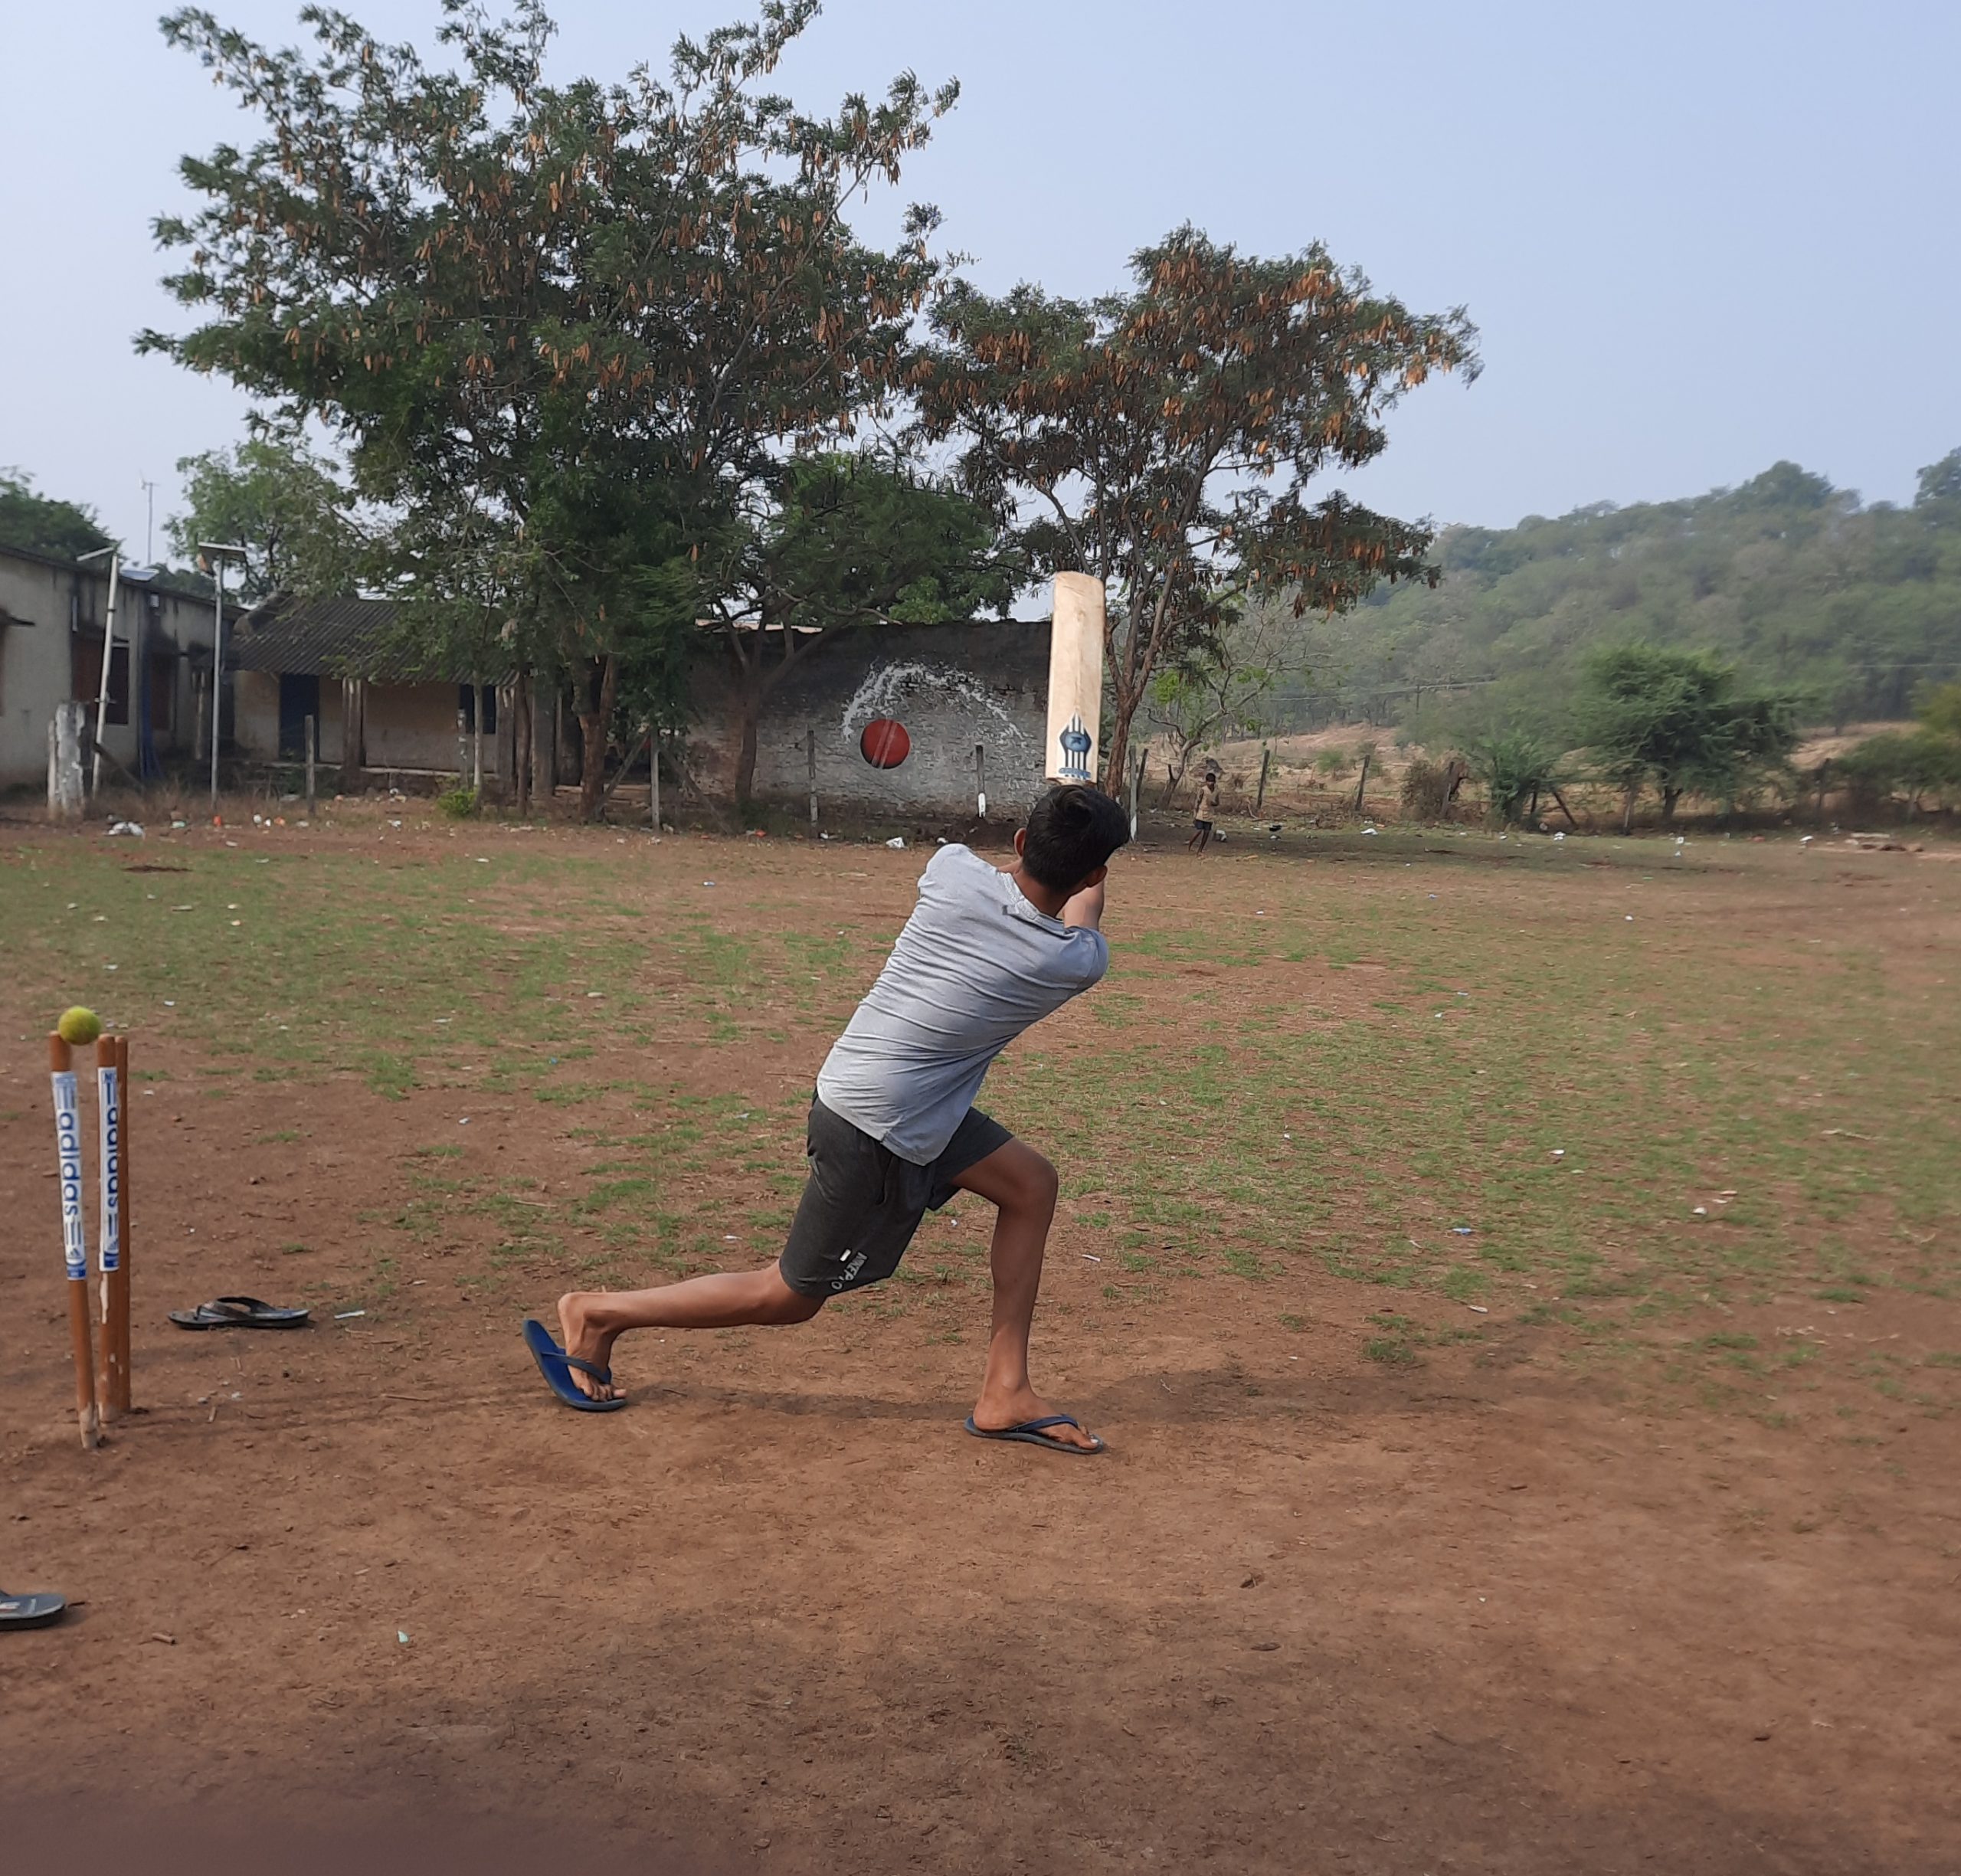 A local boy playing cricket